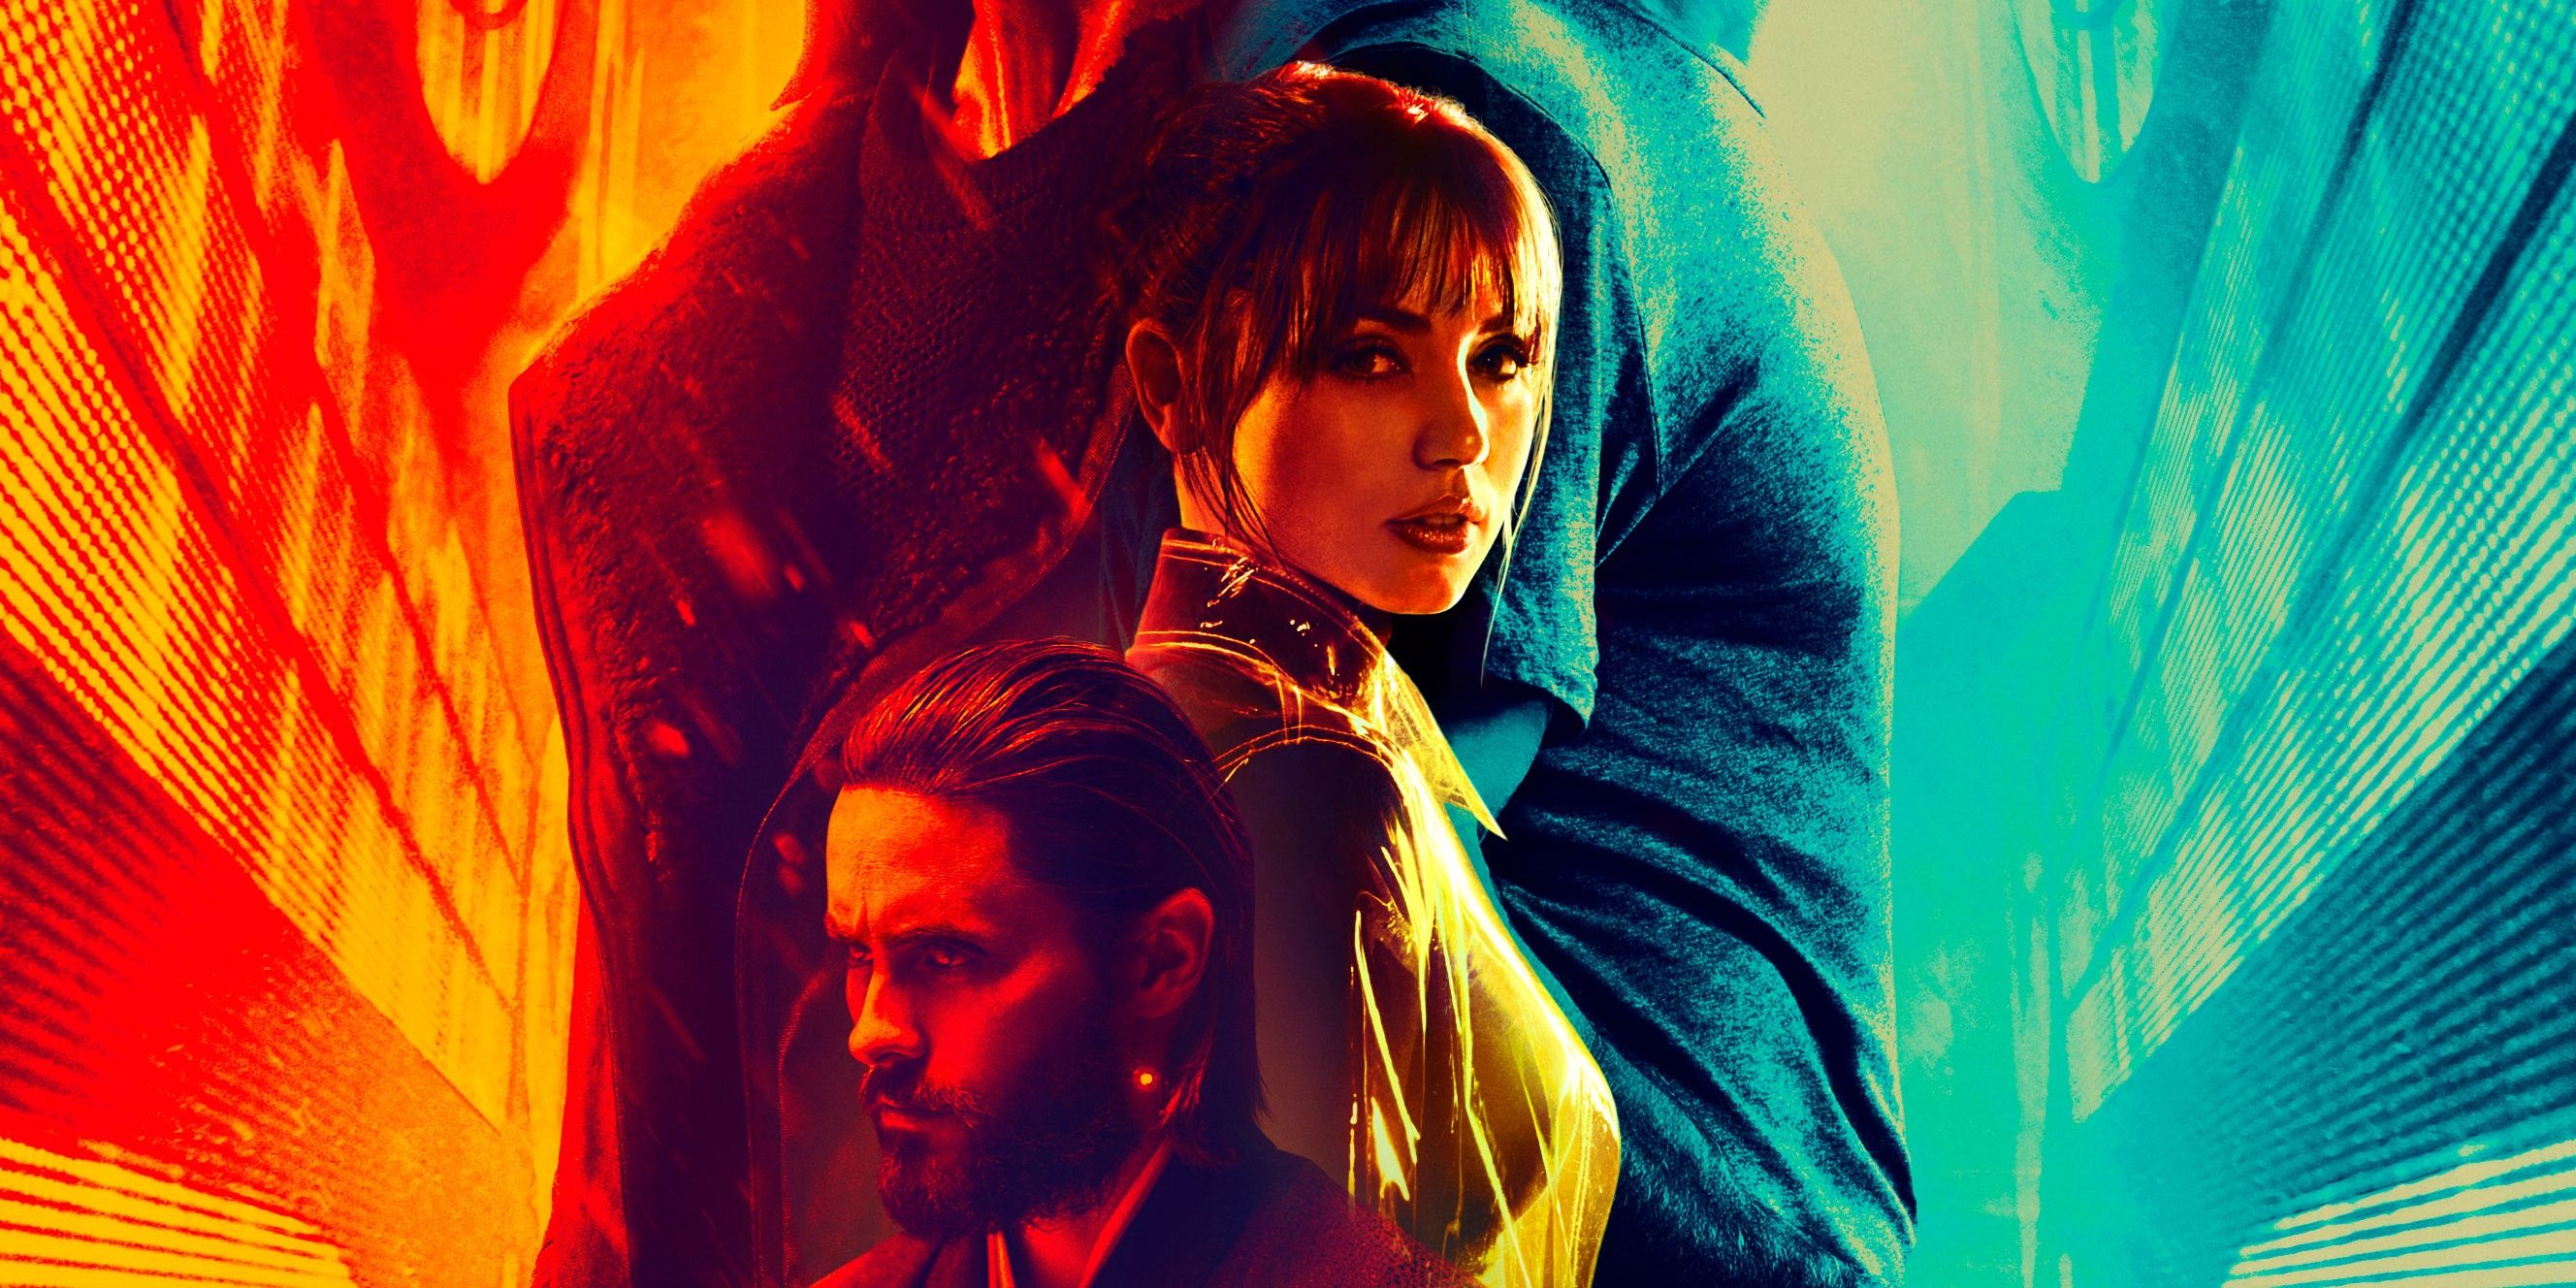 10 Hidden Details You Never Noticed In The Blade Runner 2049 Poster